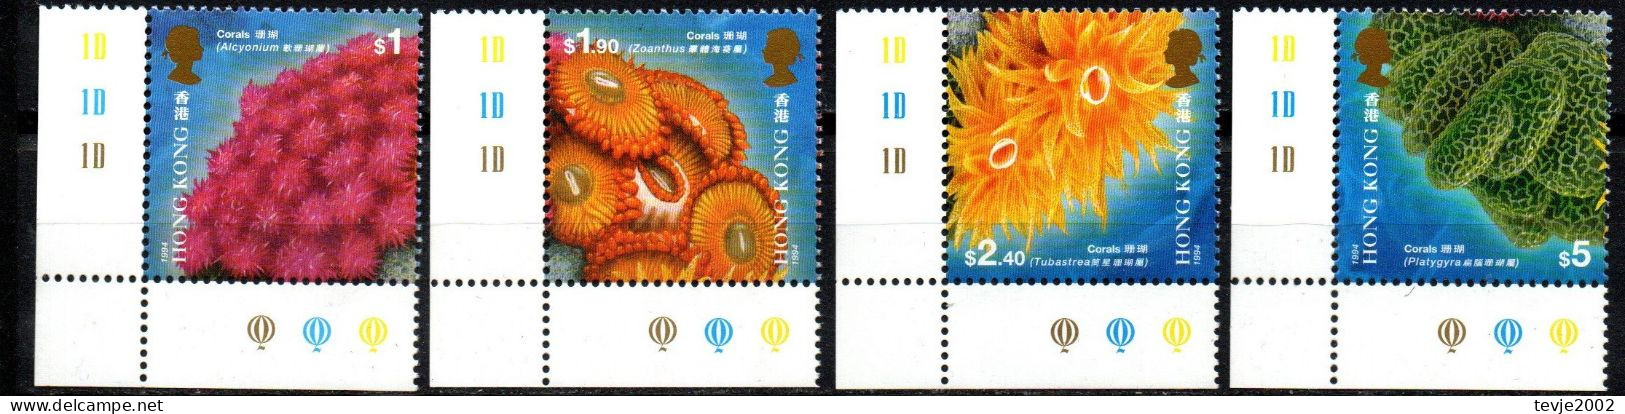 Hong Kong 1994 - Mi.Nr. 728 - 731 - Postfrisch MNH - Tiere Animals Korallen Corals - Maritiem Leven